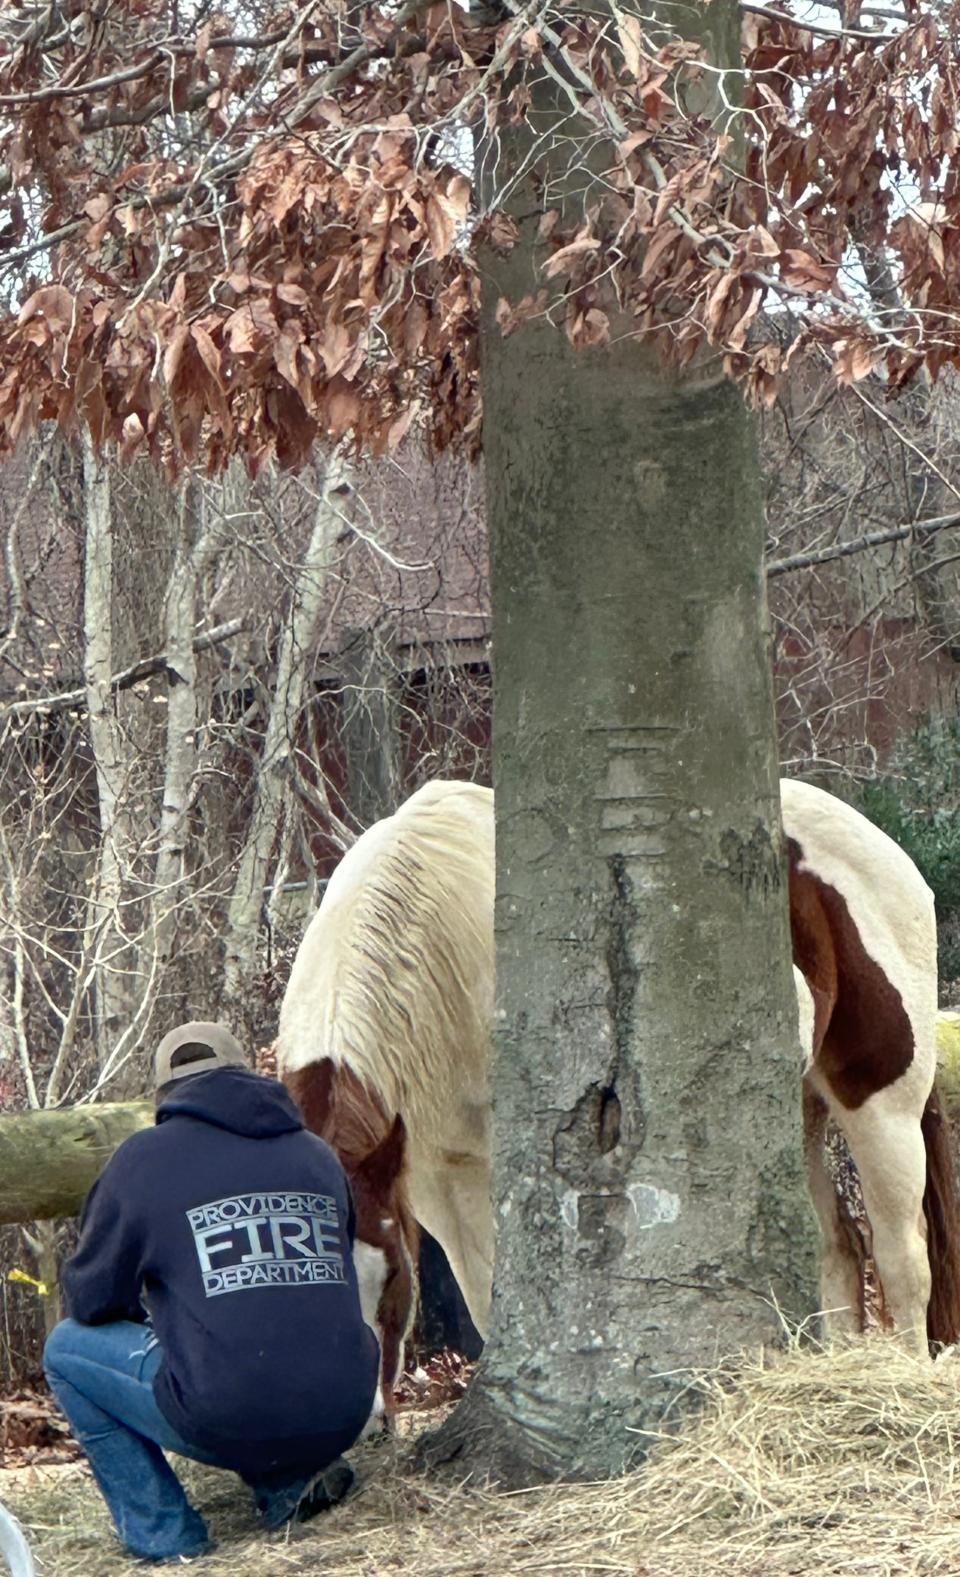 A first responder makes a new friend during Silva Spirit Farm’s Medicine Horse program in Tiverton.